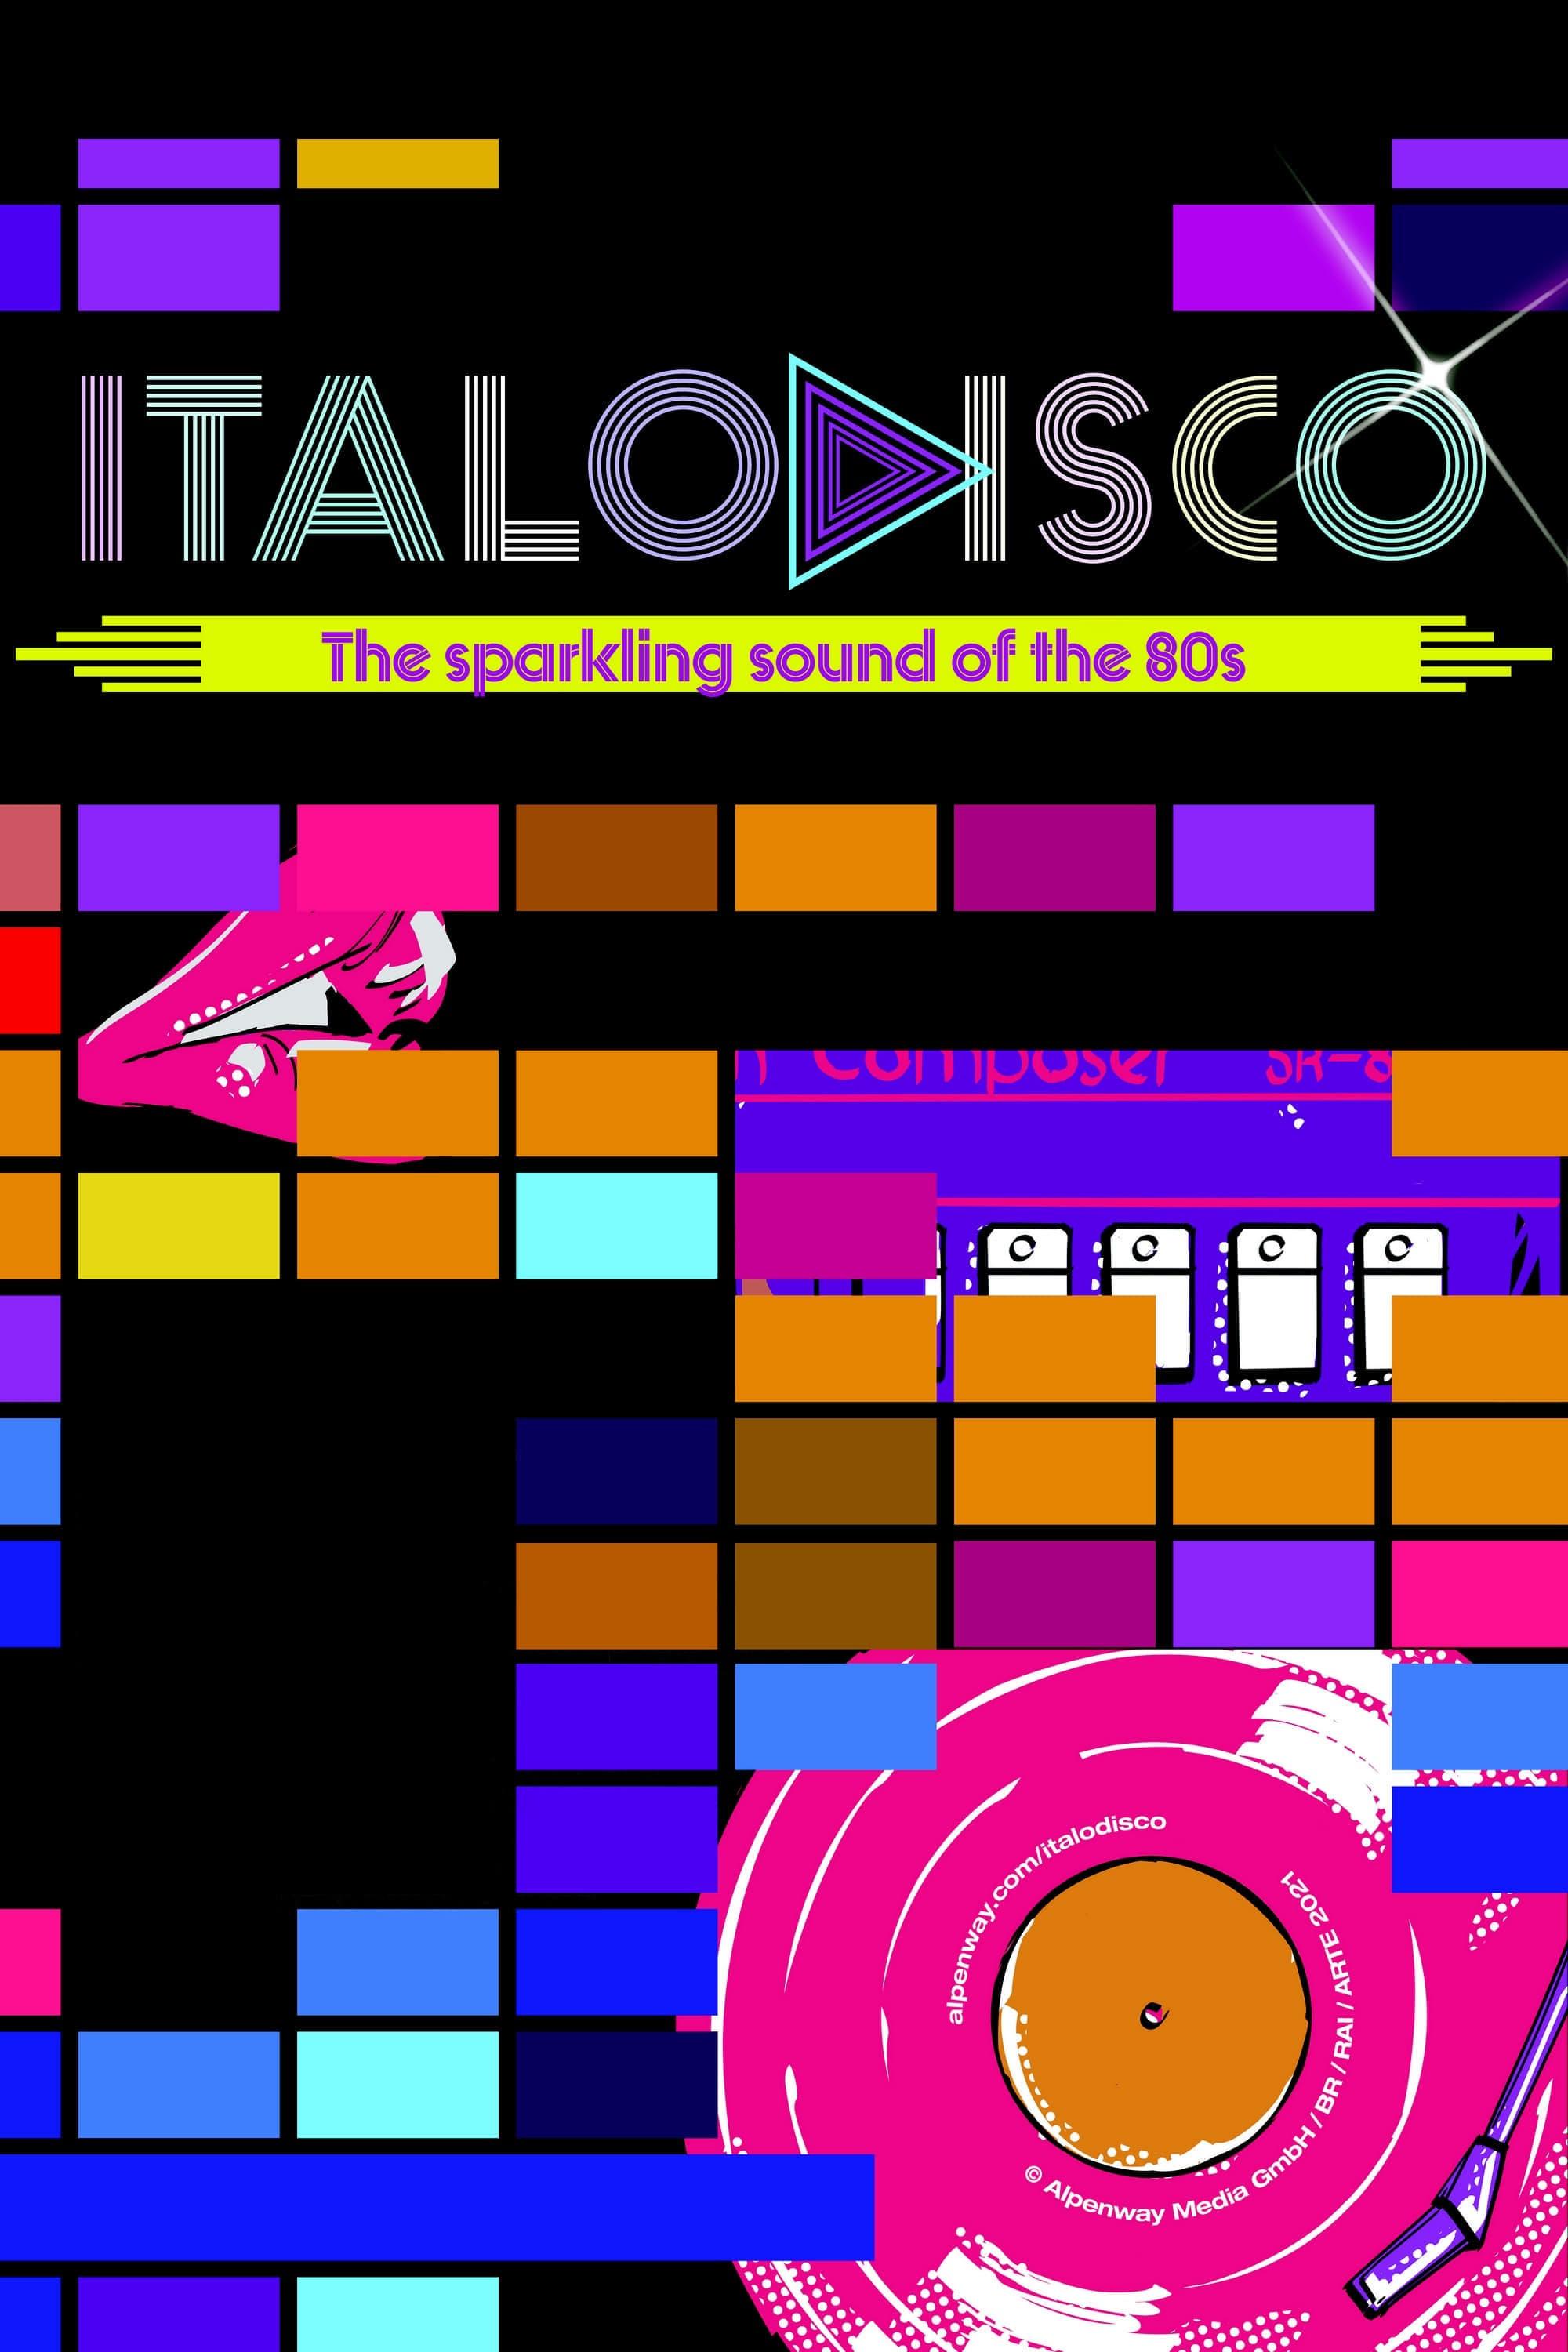 Italo Disco: The Sparkling Sound of the 80s poster